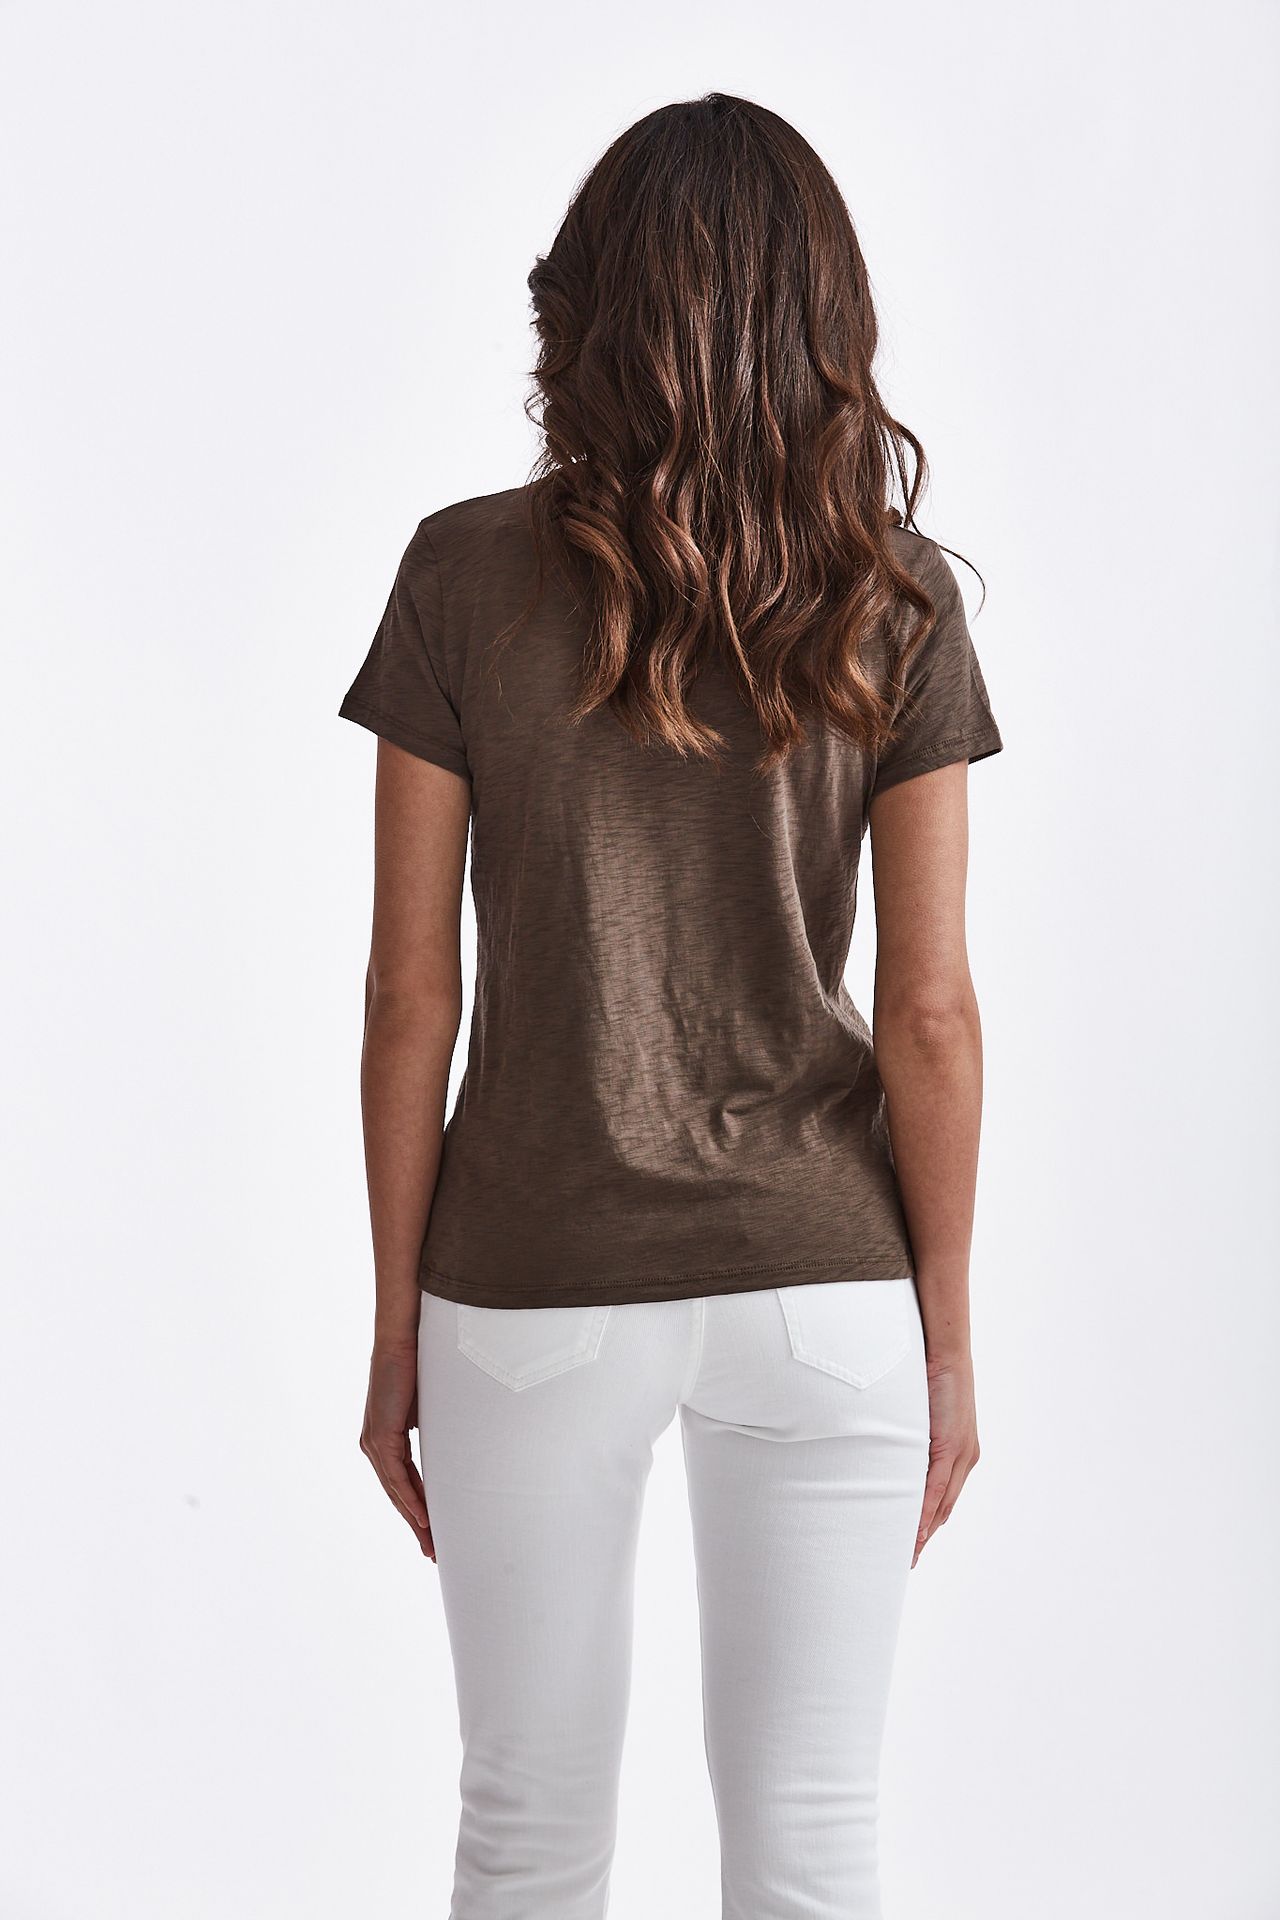 T-shirt MARYBEL FIAMMATA in cotone marrone